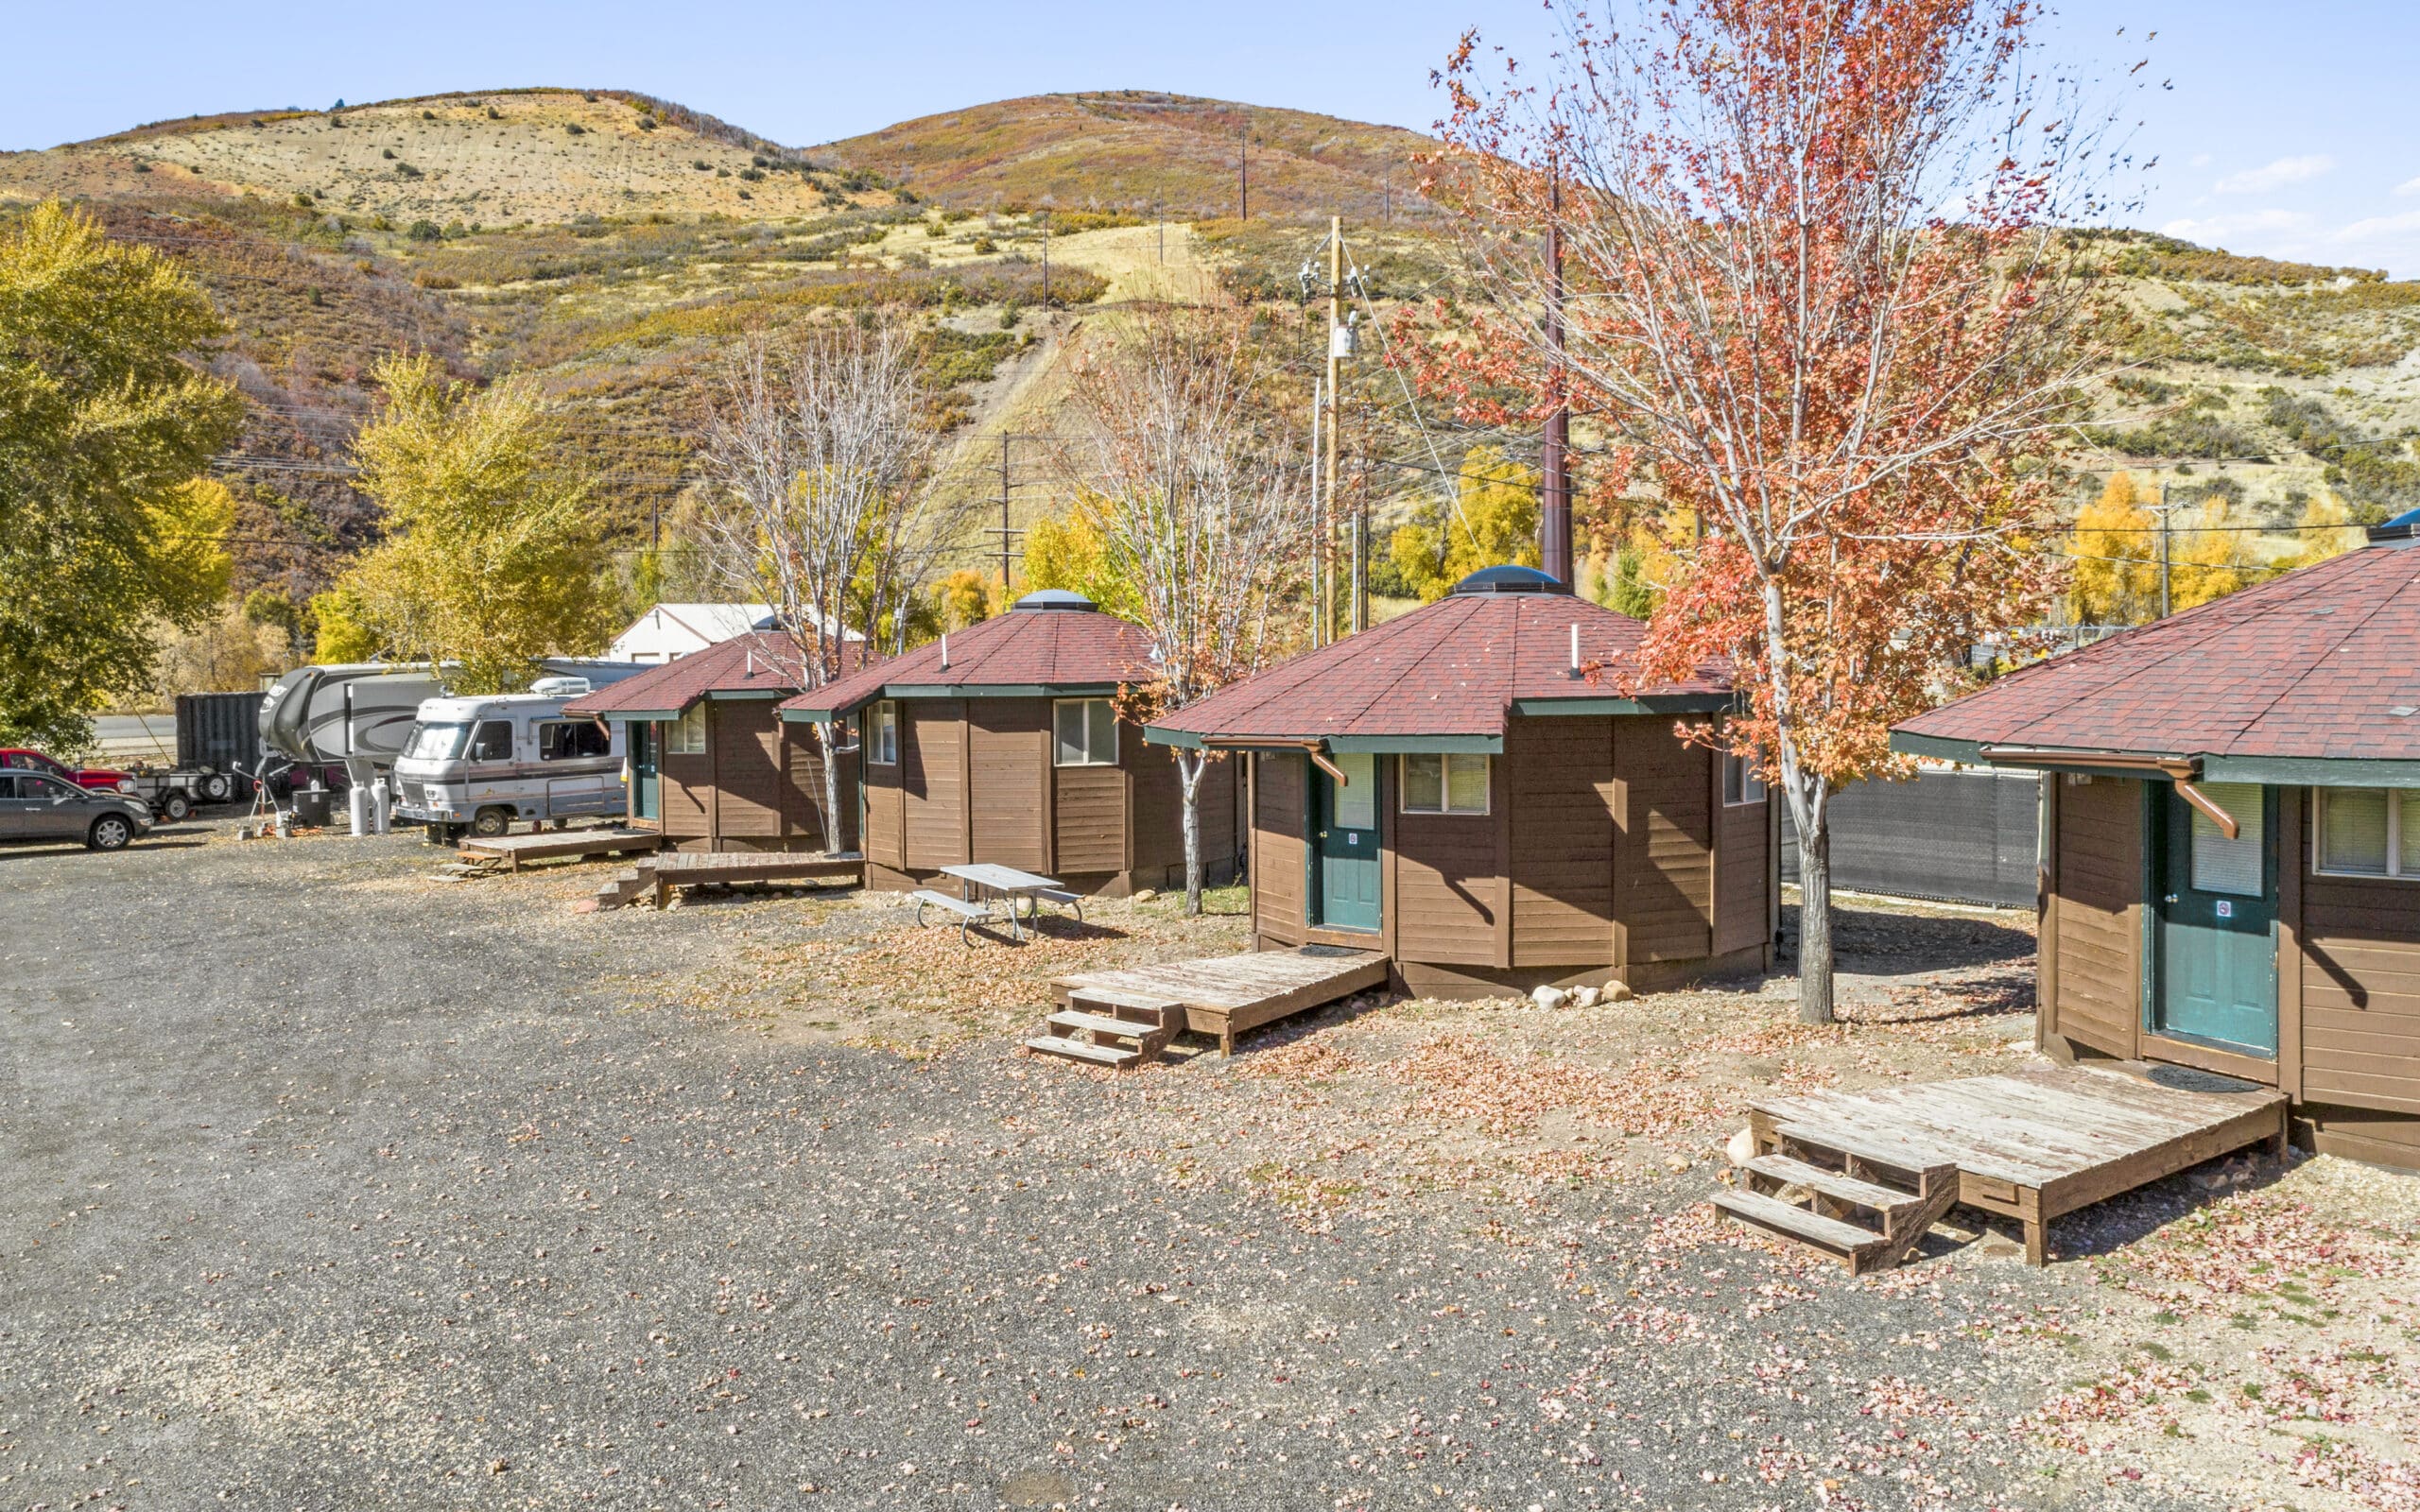 Yurt options at Rivers Edge Campground